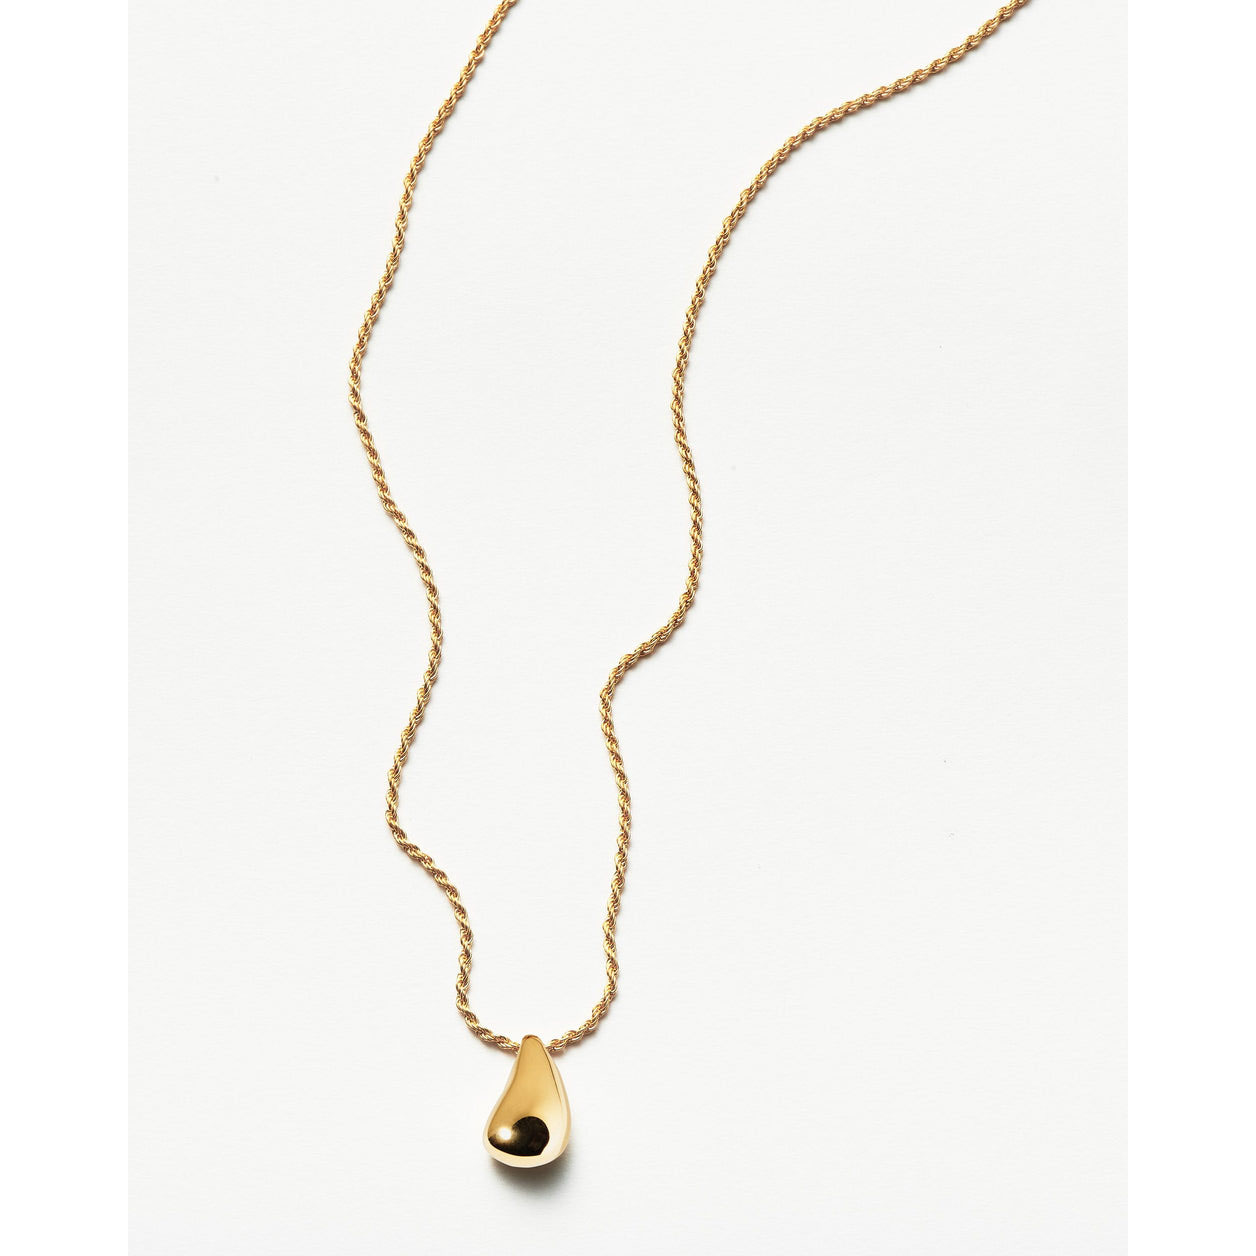 Custom wholesale jewelry savi sculptural droplet pendant necklace18k gold plated vermeil